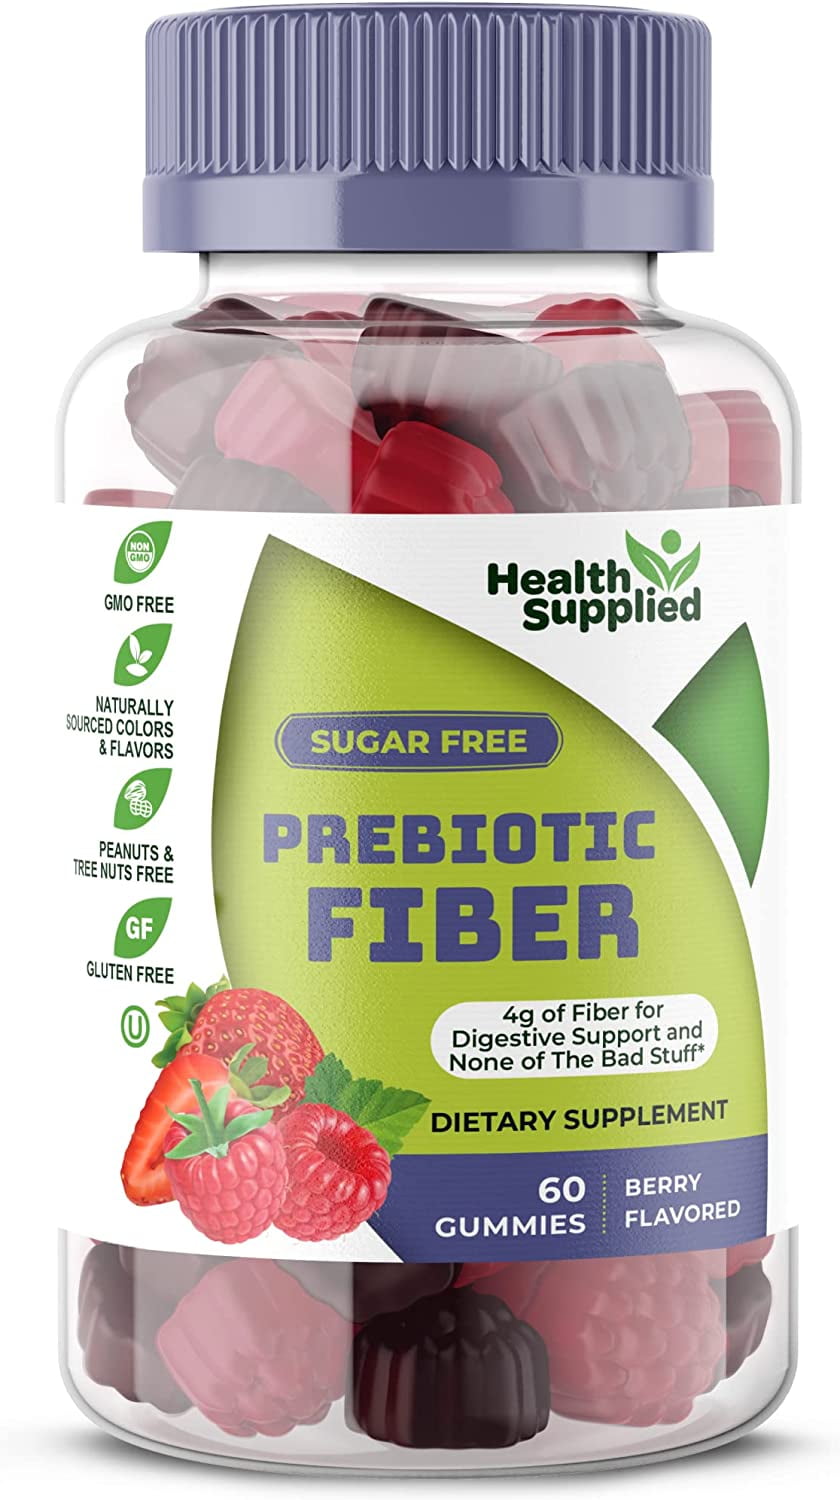  Fiber Choice Metabolism and Energy Daily Prebiotic Fiber  Gummies 90 count : Health & Household